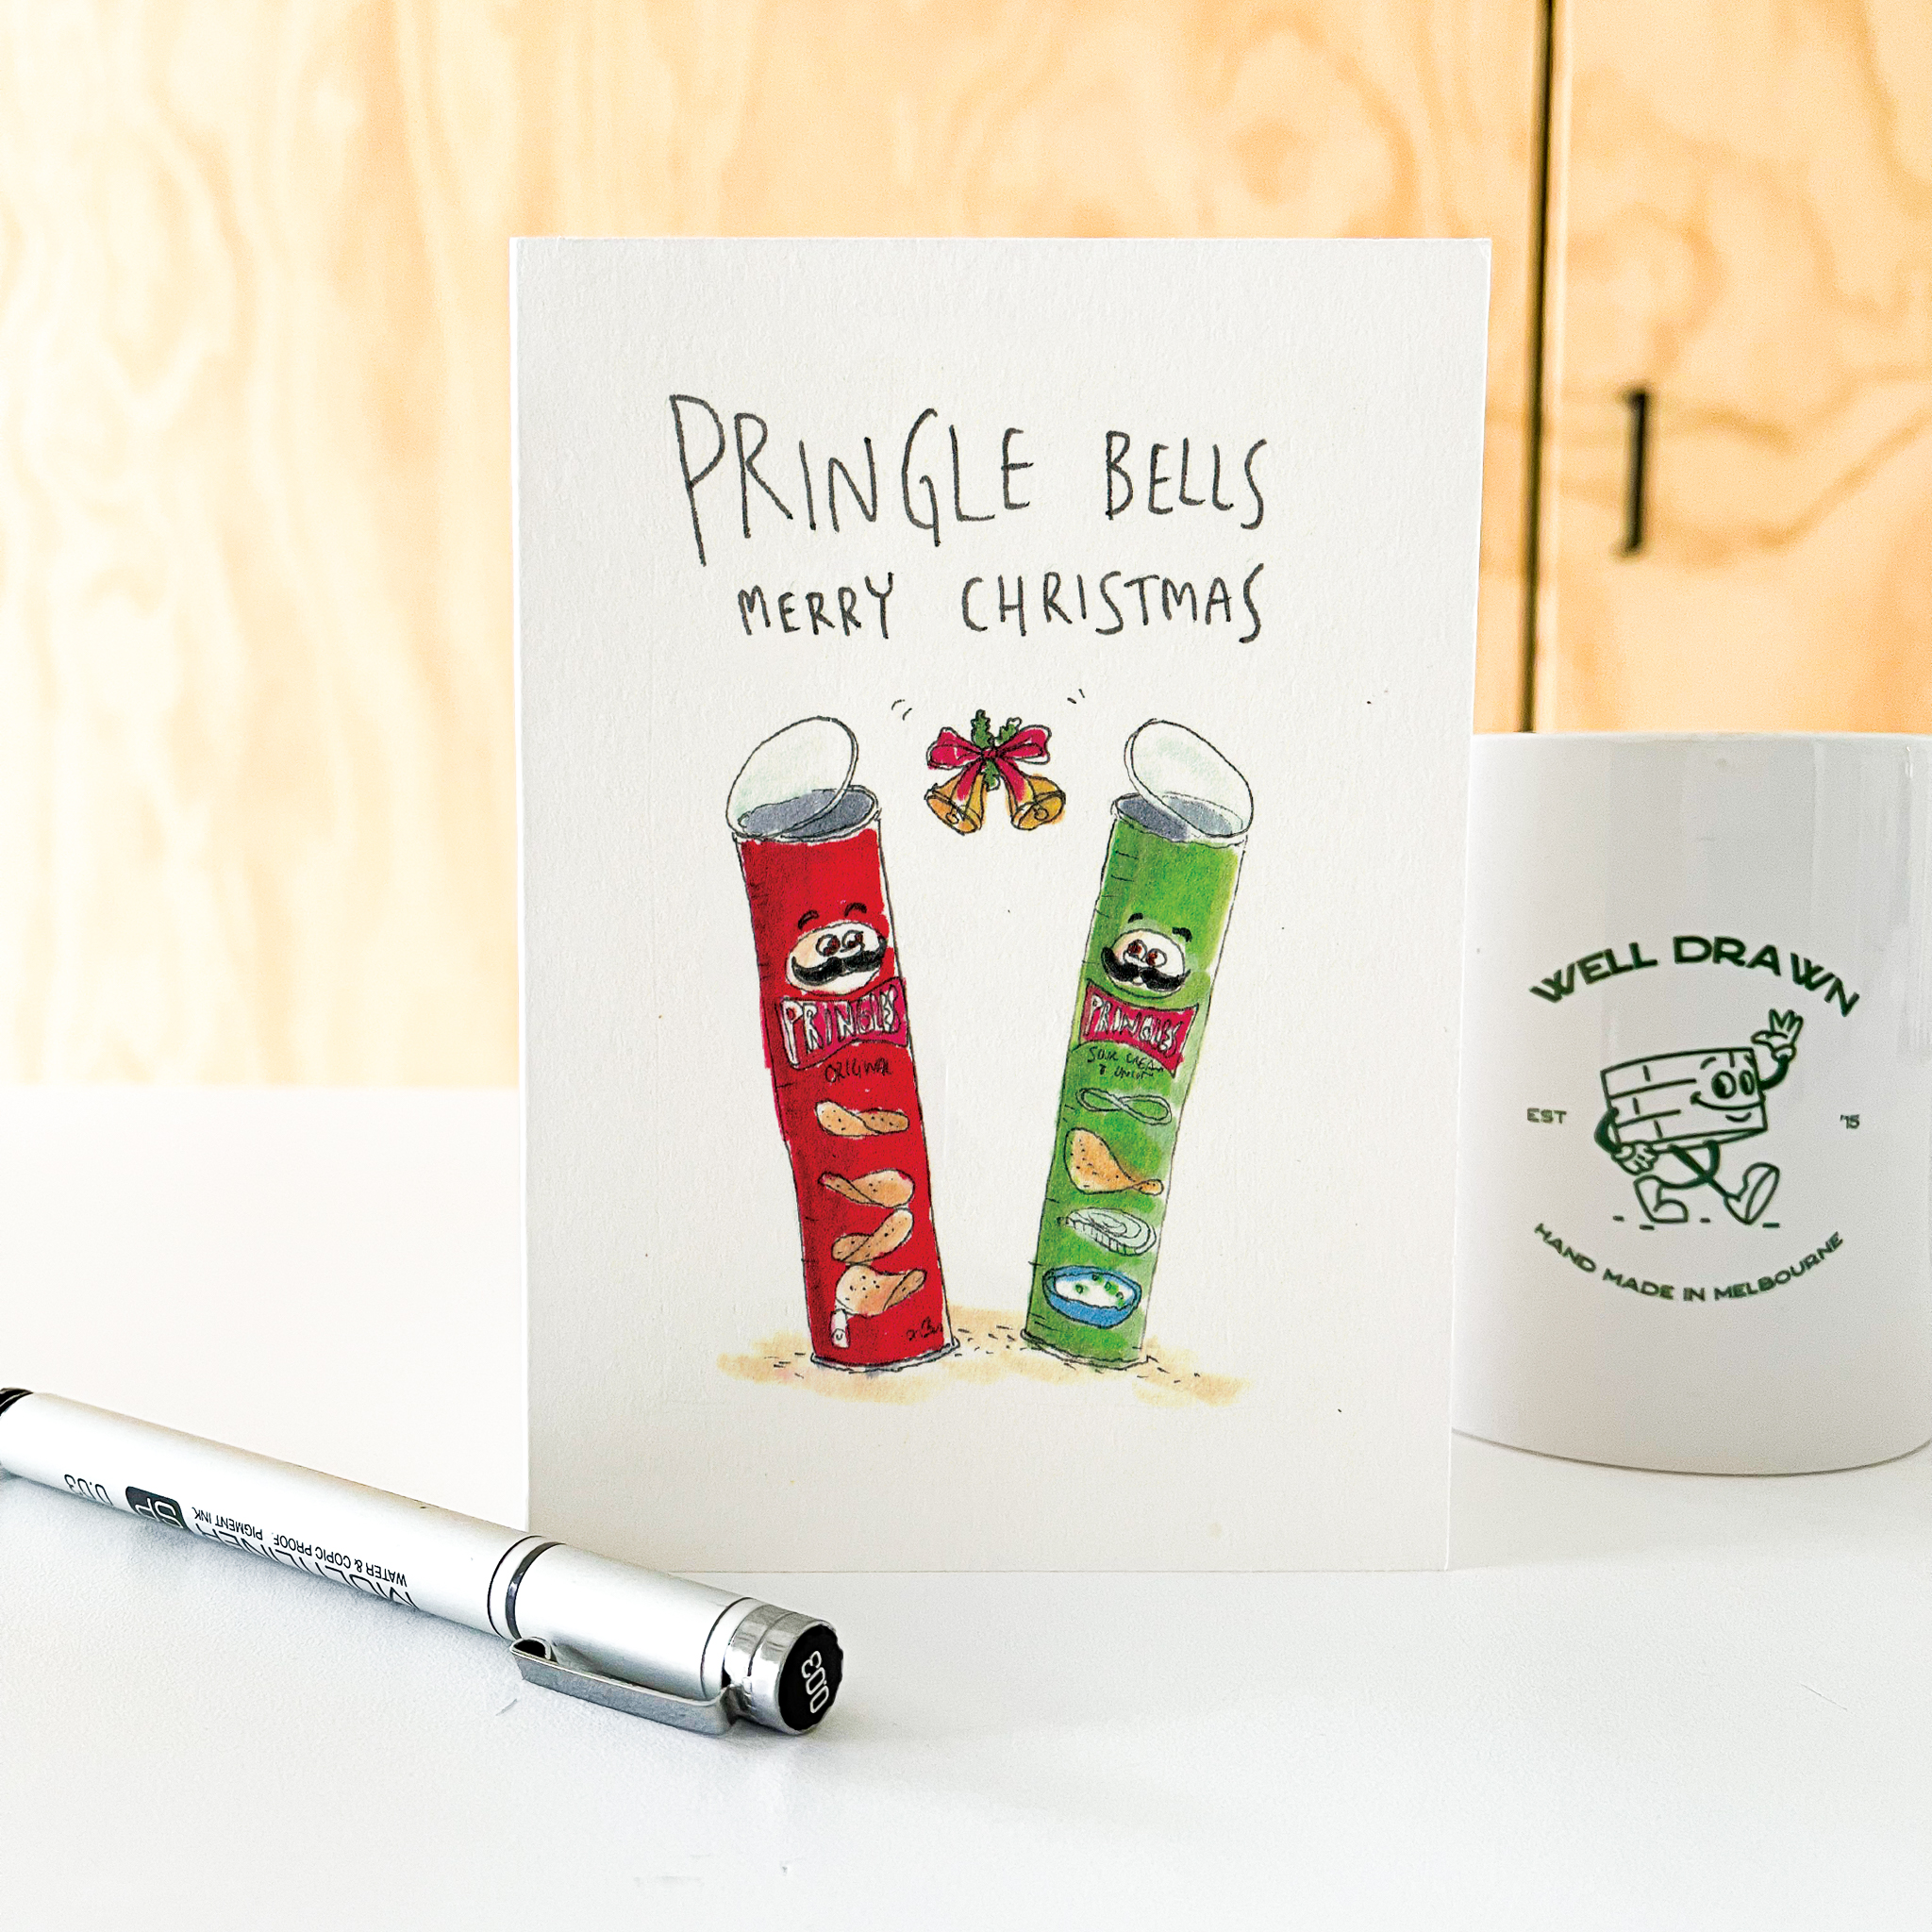 Pringle Bells, Merry Christmas